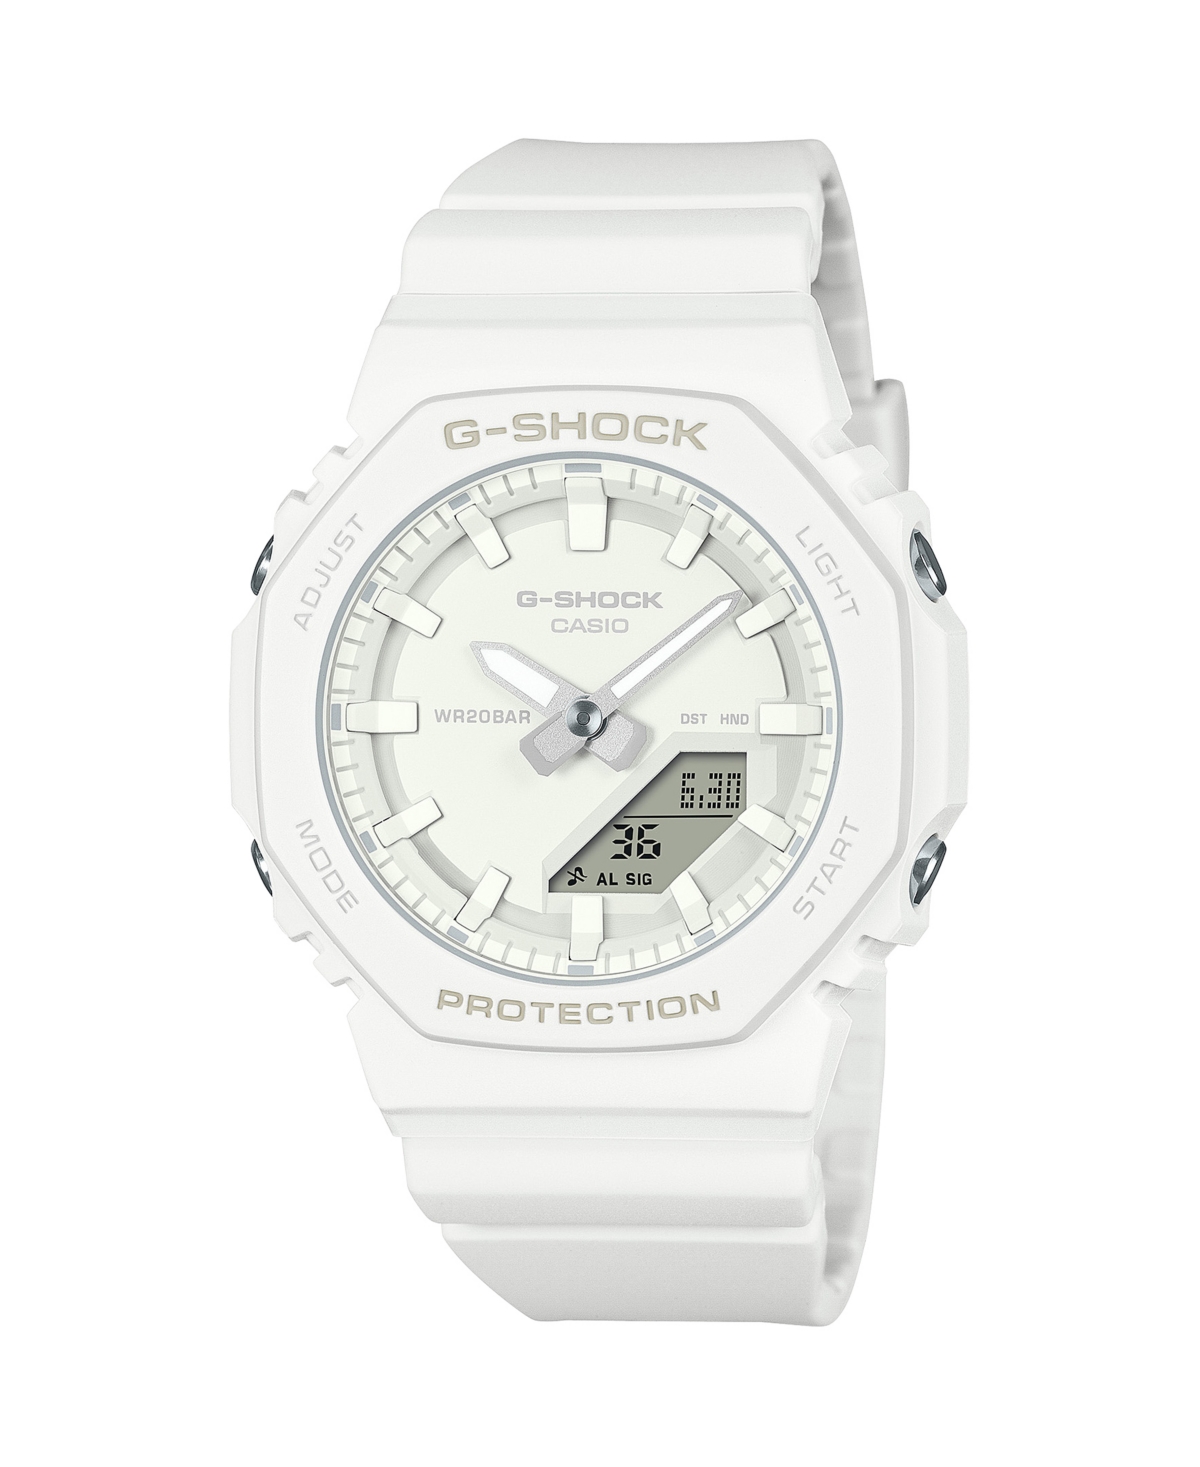 Unisex Analog Digital White Resin Watch, 40.2mm, GMAP2100-7A - White